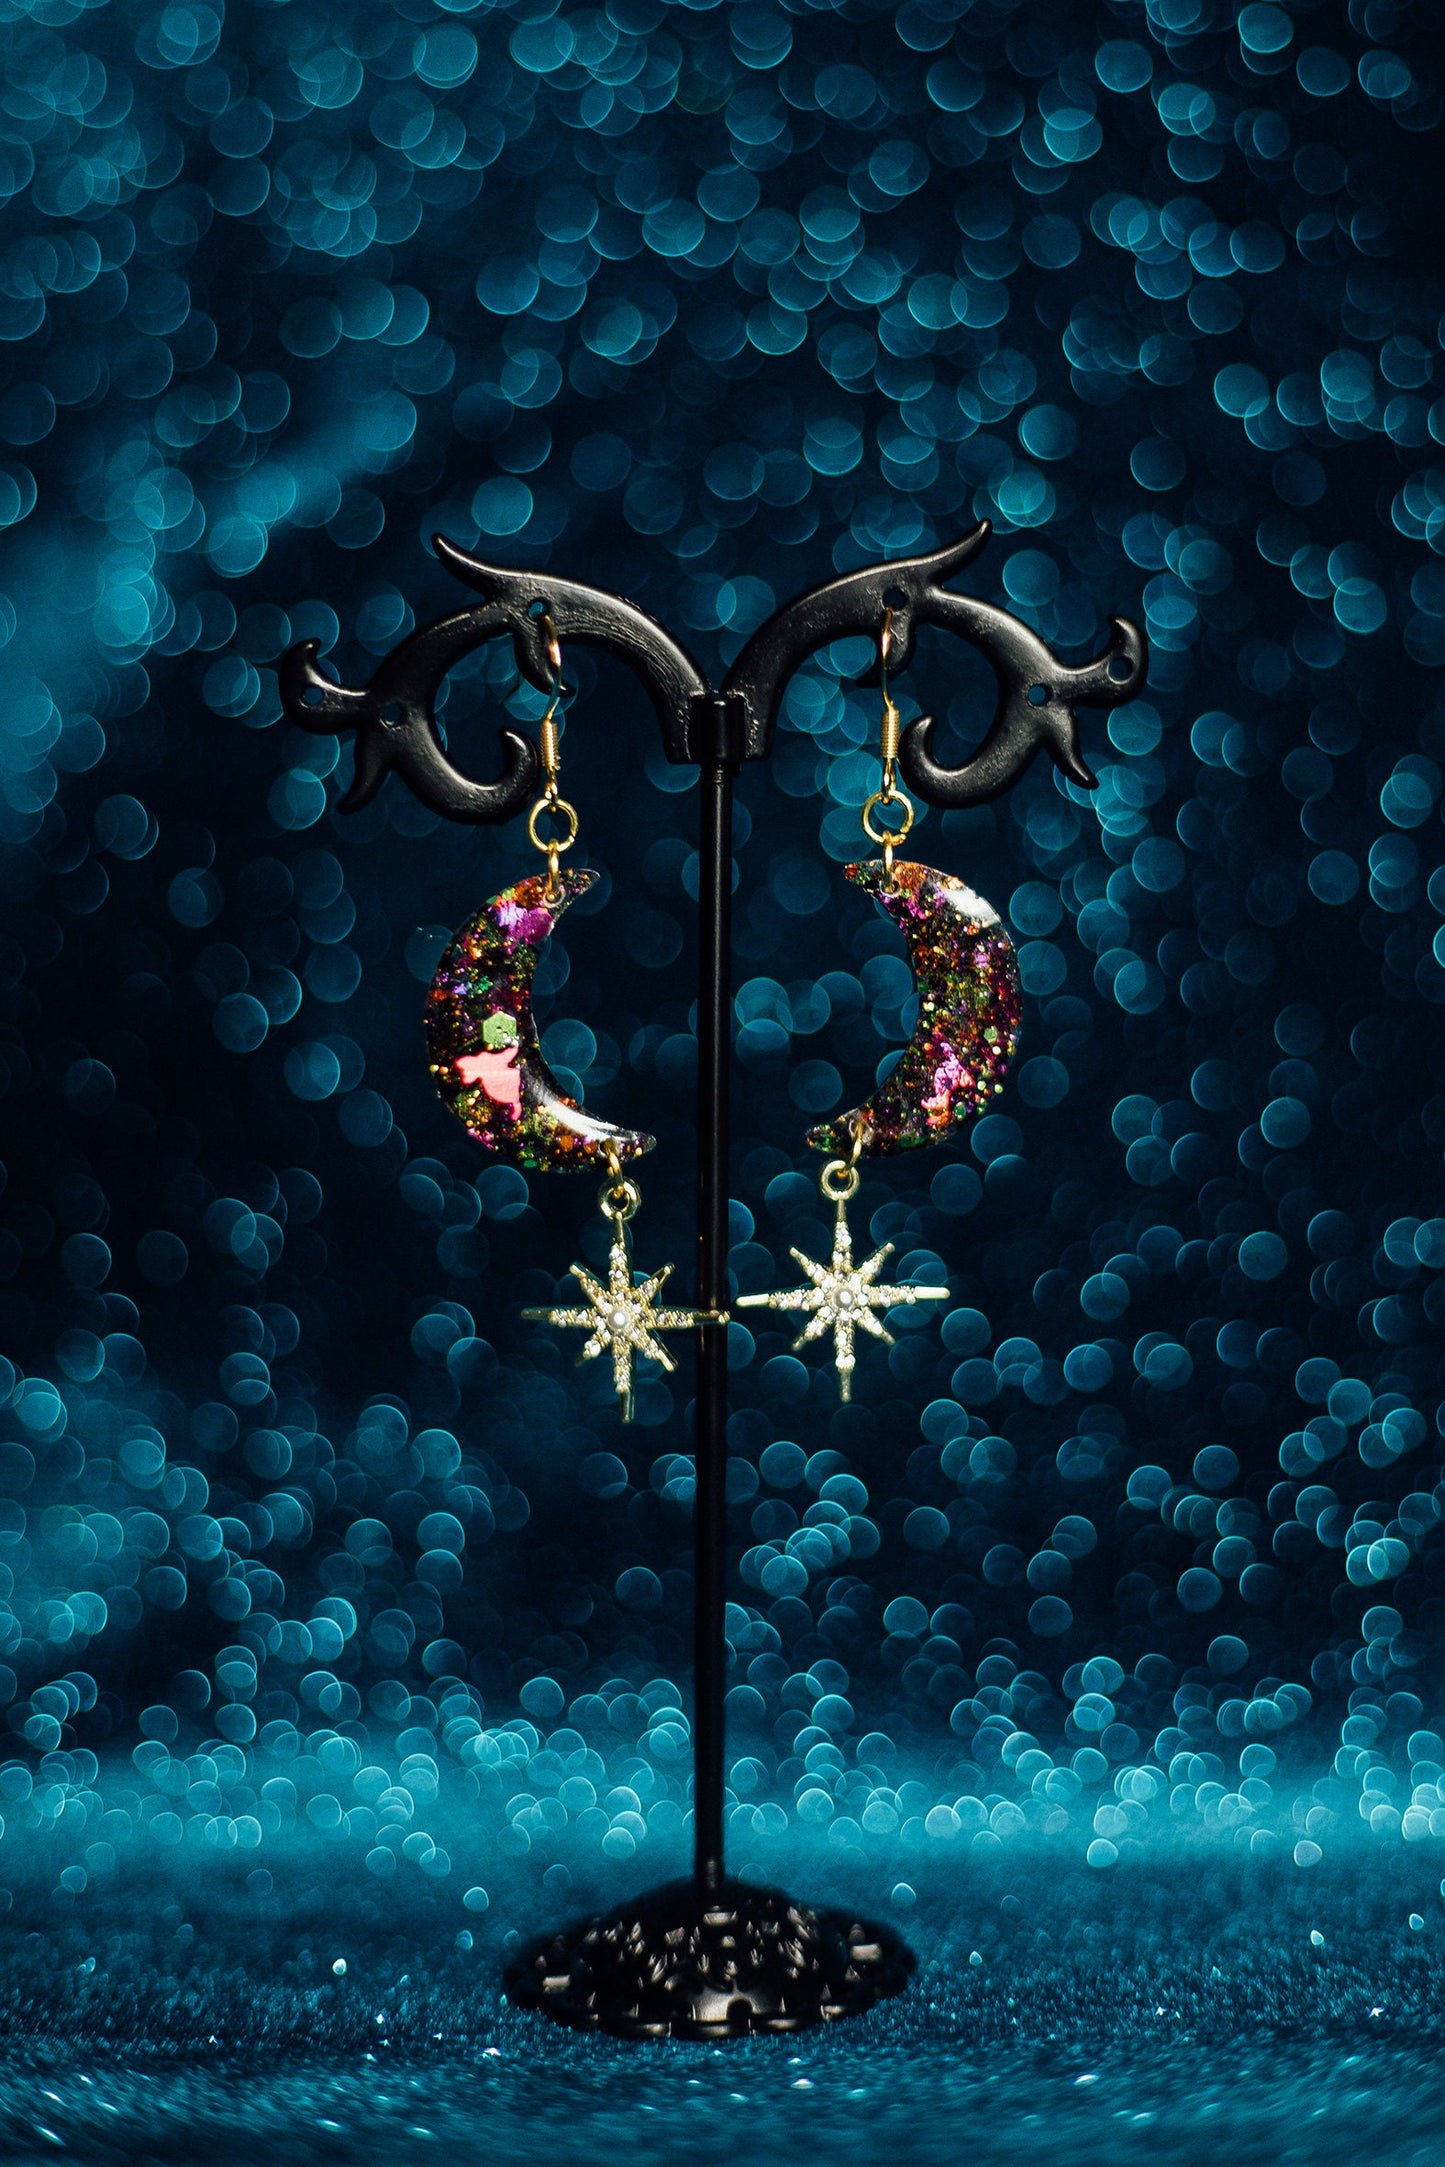 Spooky Season Dangle Earrings - LOTS OF CHOICES! - Custom Earrings - 2